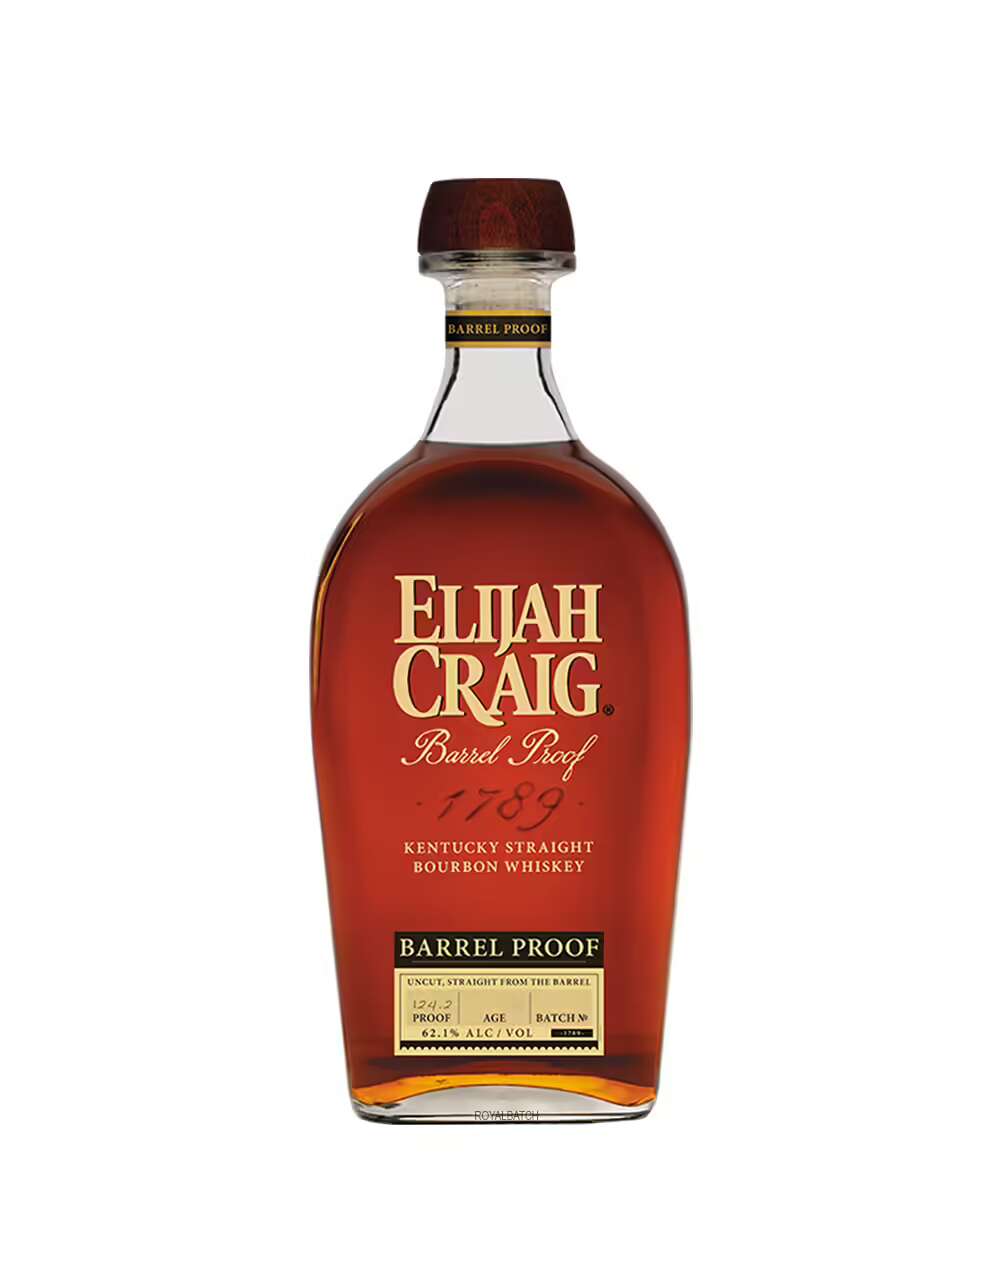 Elijah Craig Barrel Proof (Batch B519, B521 and A121) 12 Year Old Bourbon Whiskey